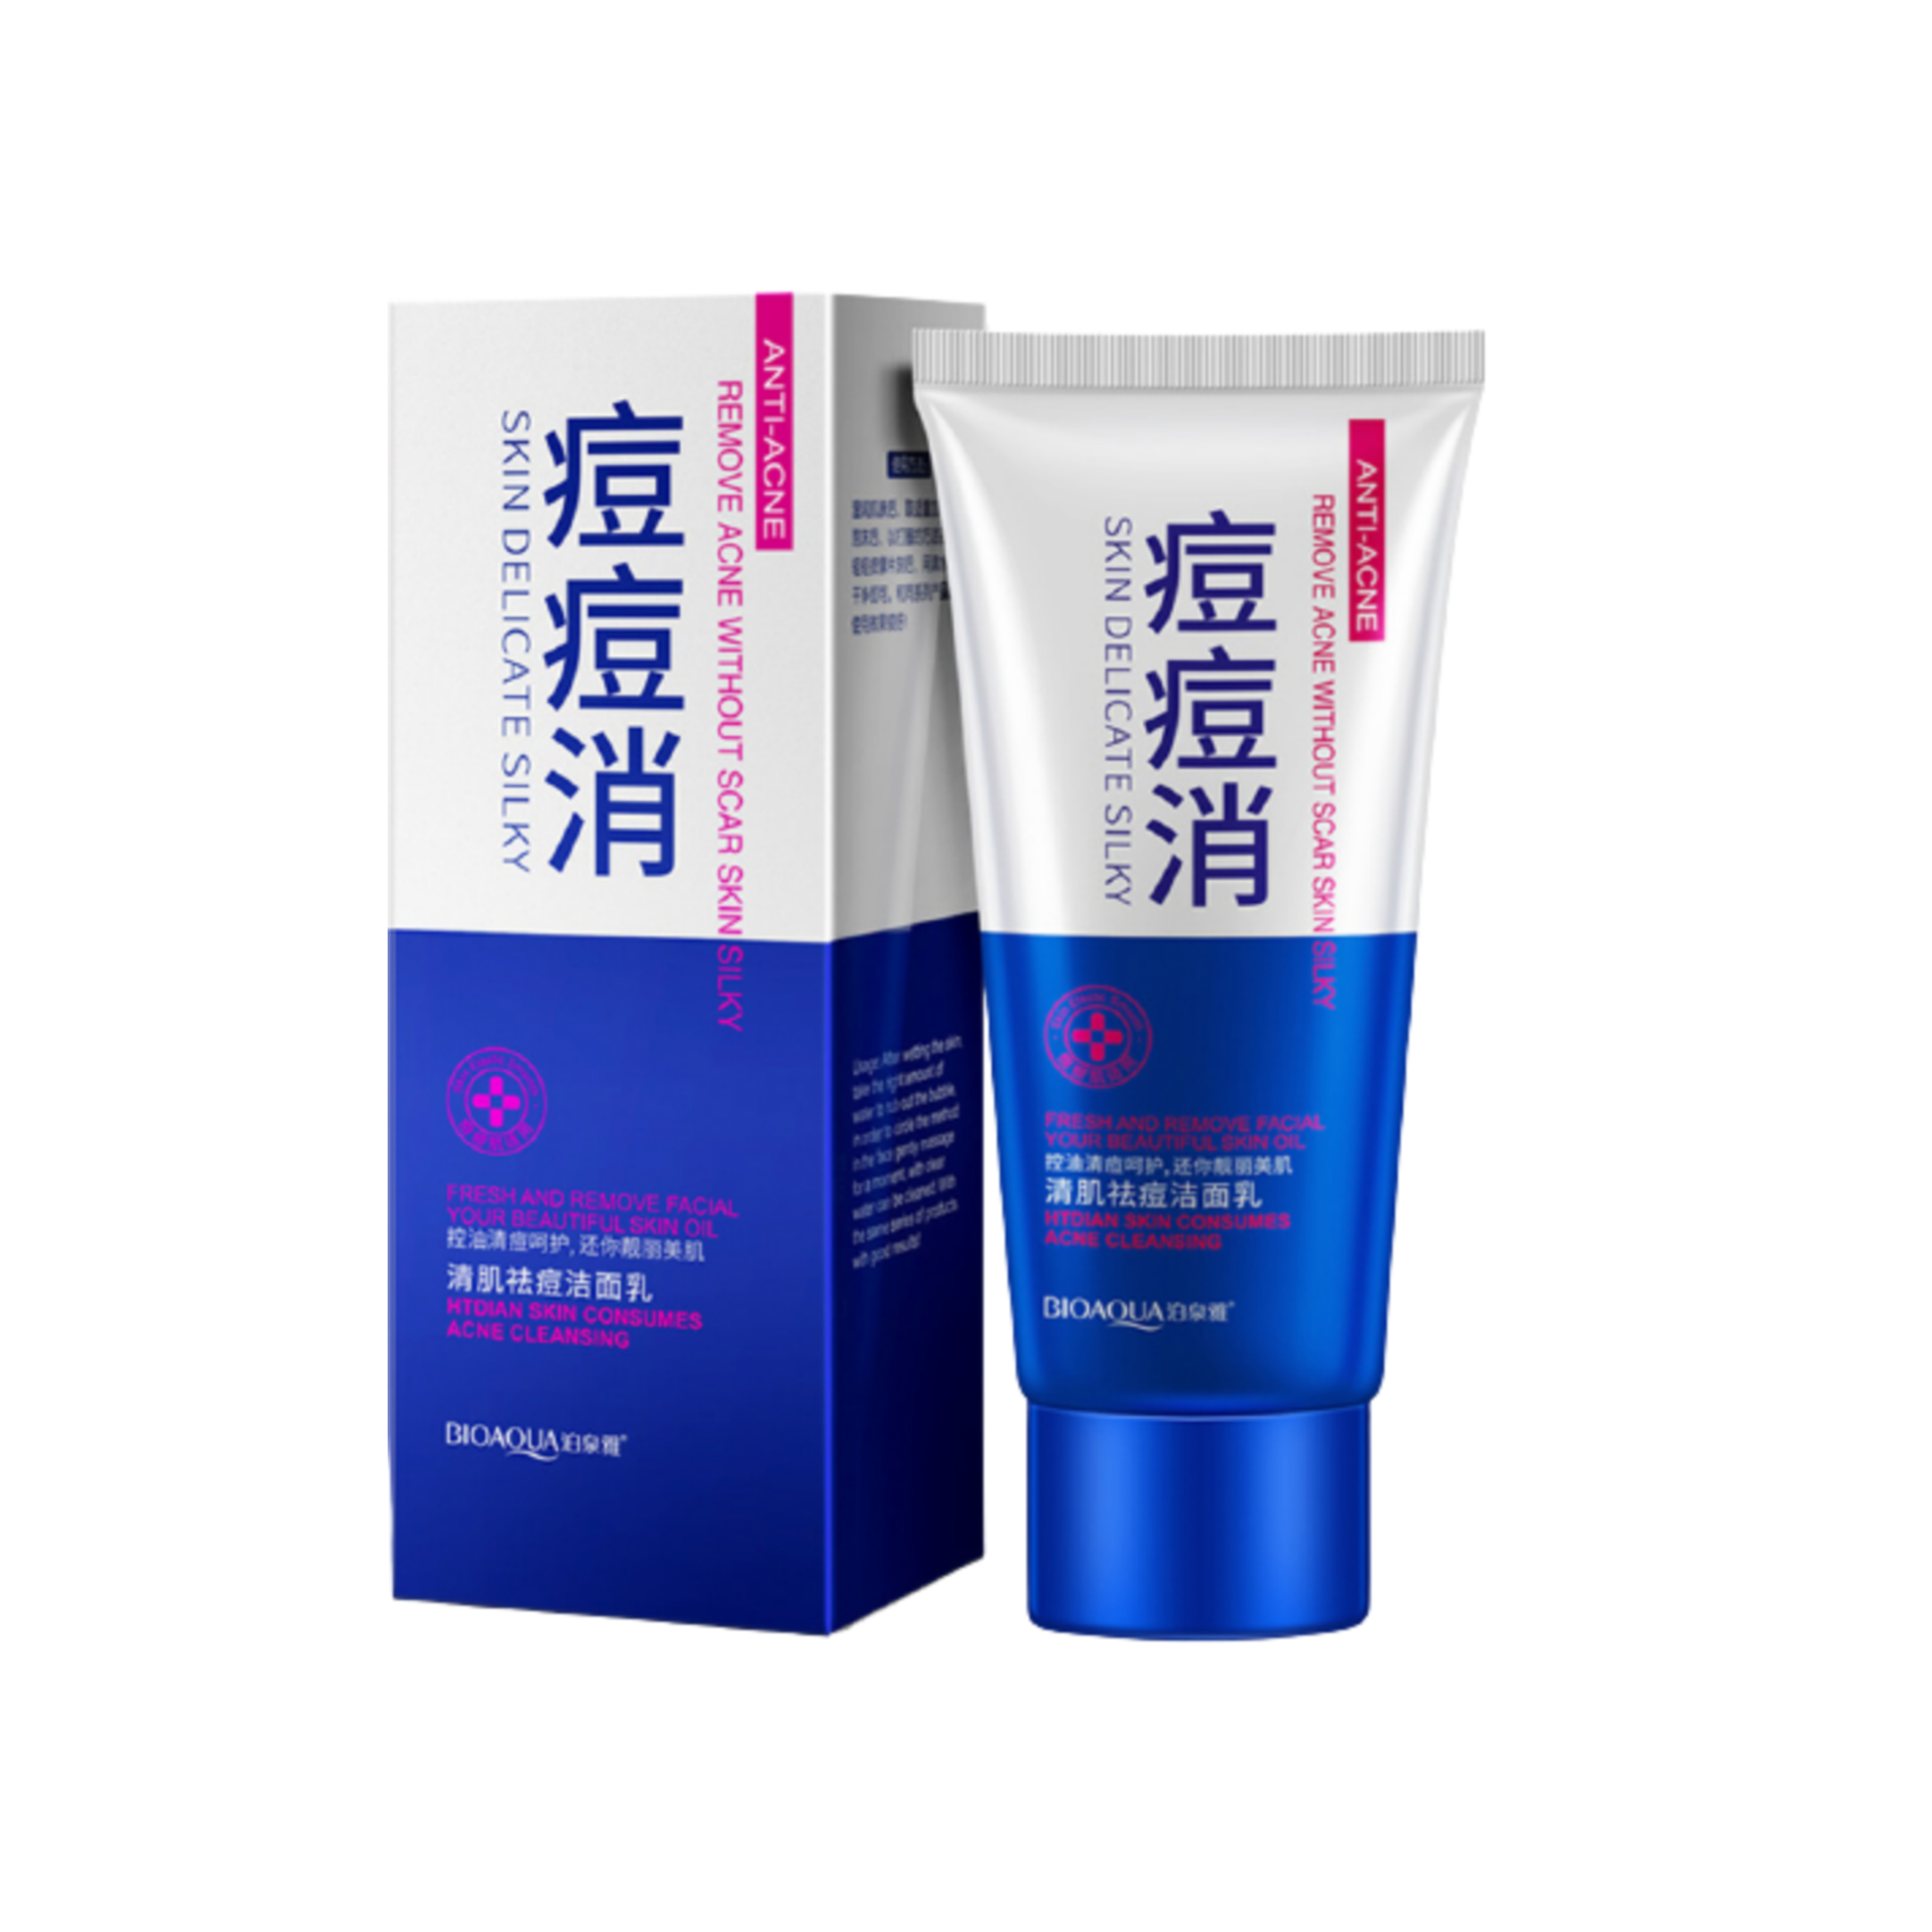 BIOAQUA Anti-acne Cleansing Foam Пенка для умывания анти-акне, 100г